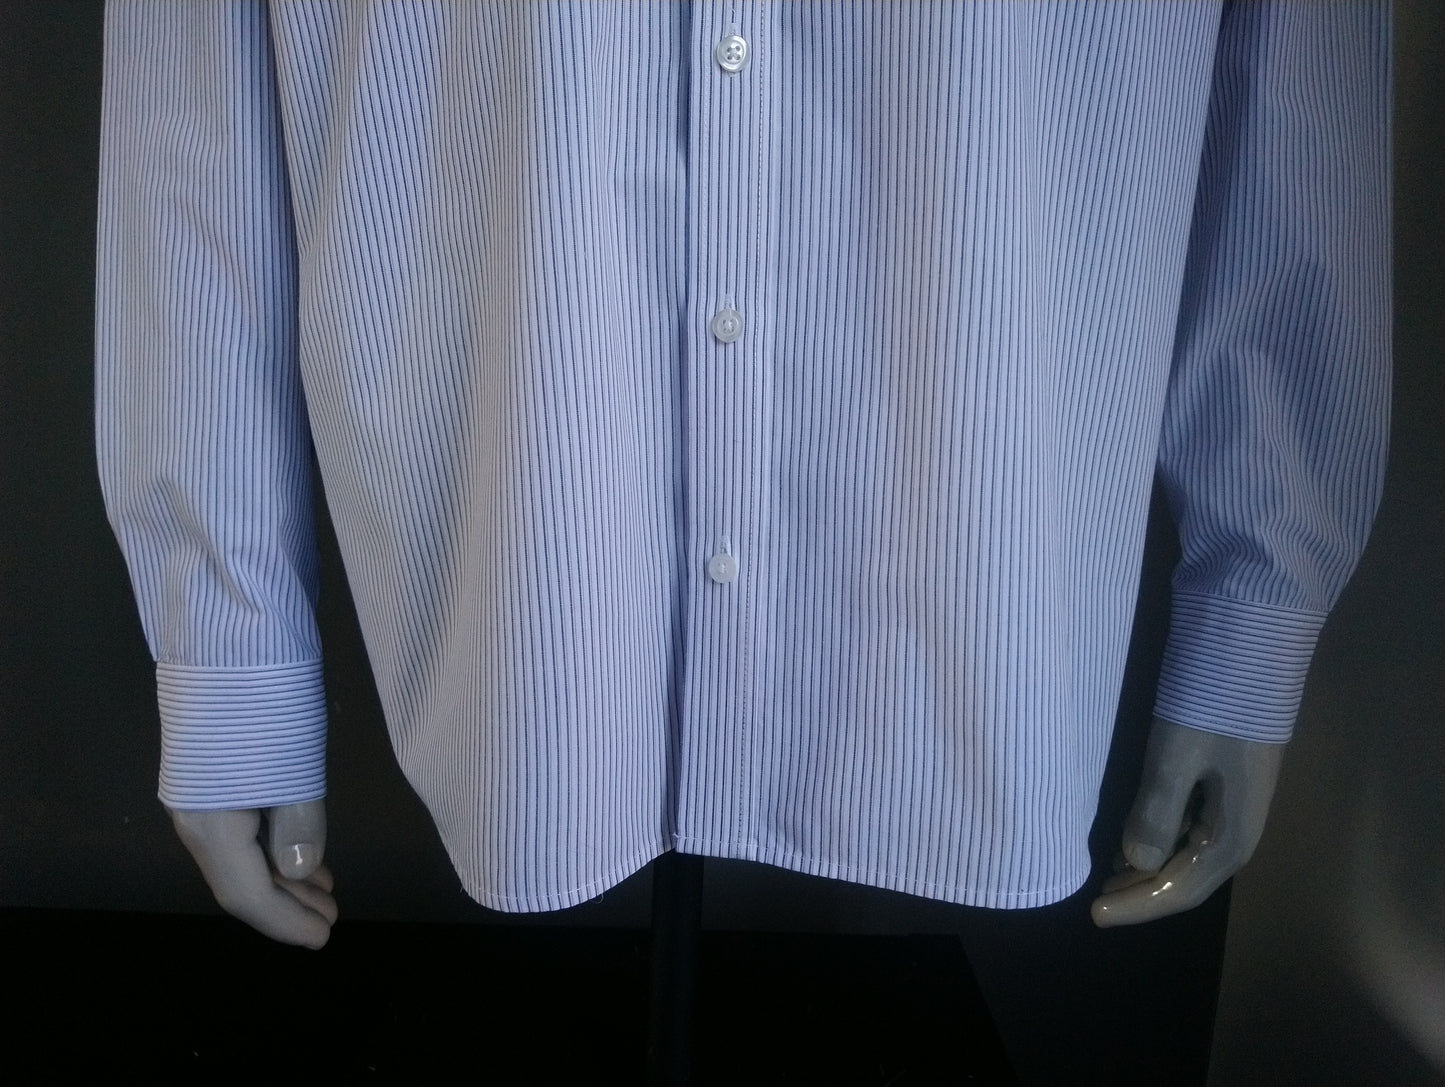 Camicia per sartoria F & F. Bilancia viola bianca blu. Taglia XL / XXL